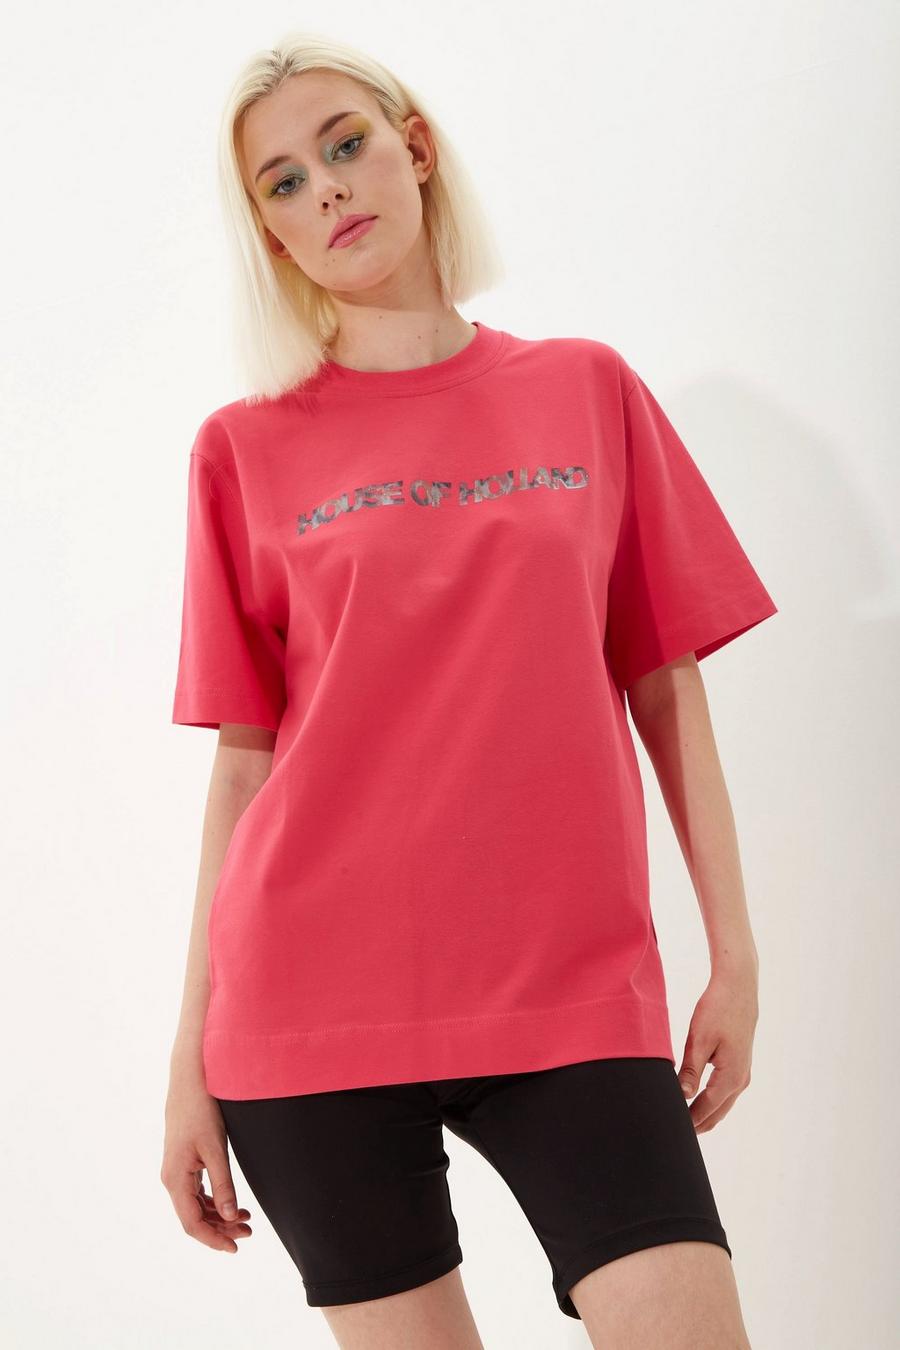 Hot Pink Transfer Printed T-Shirt